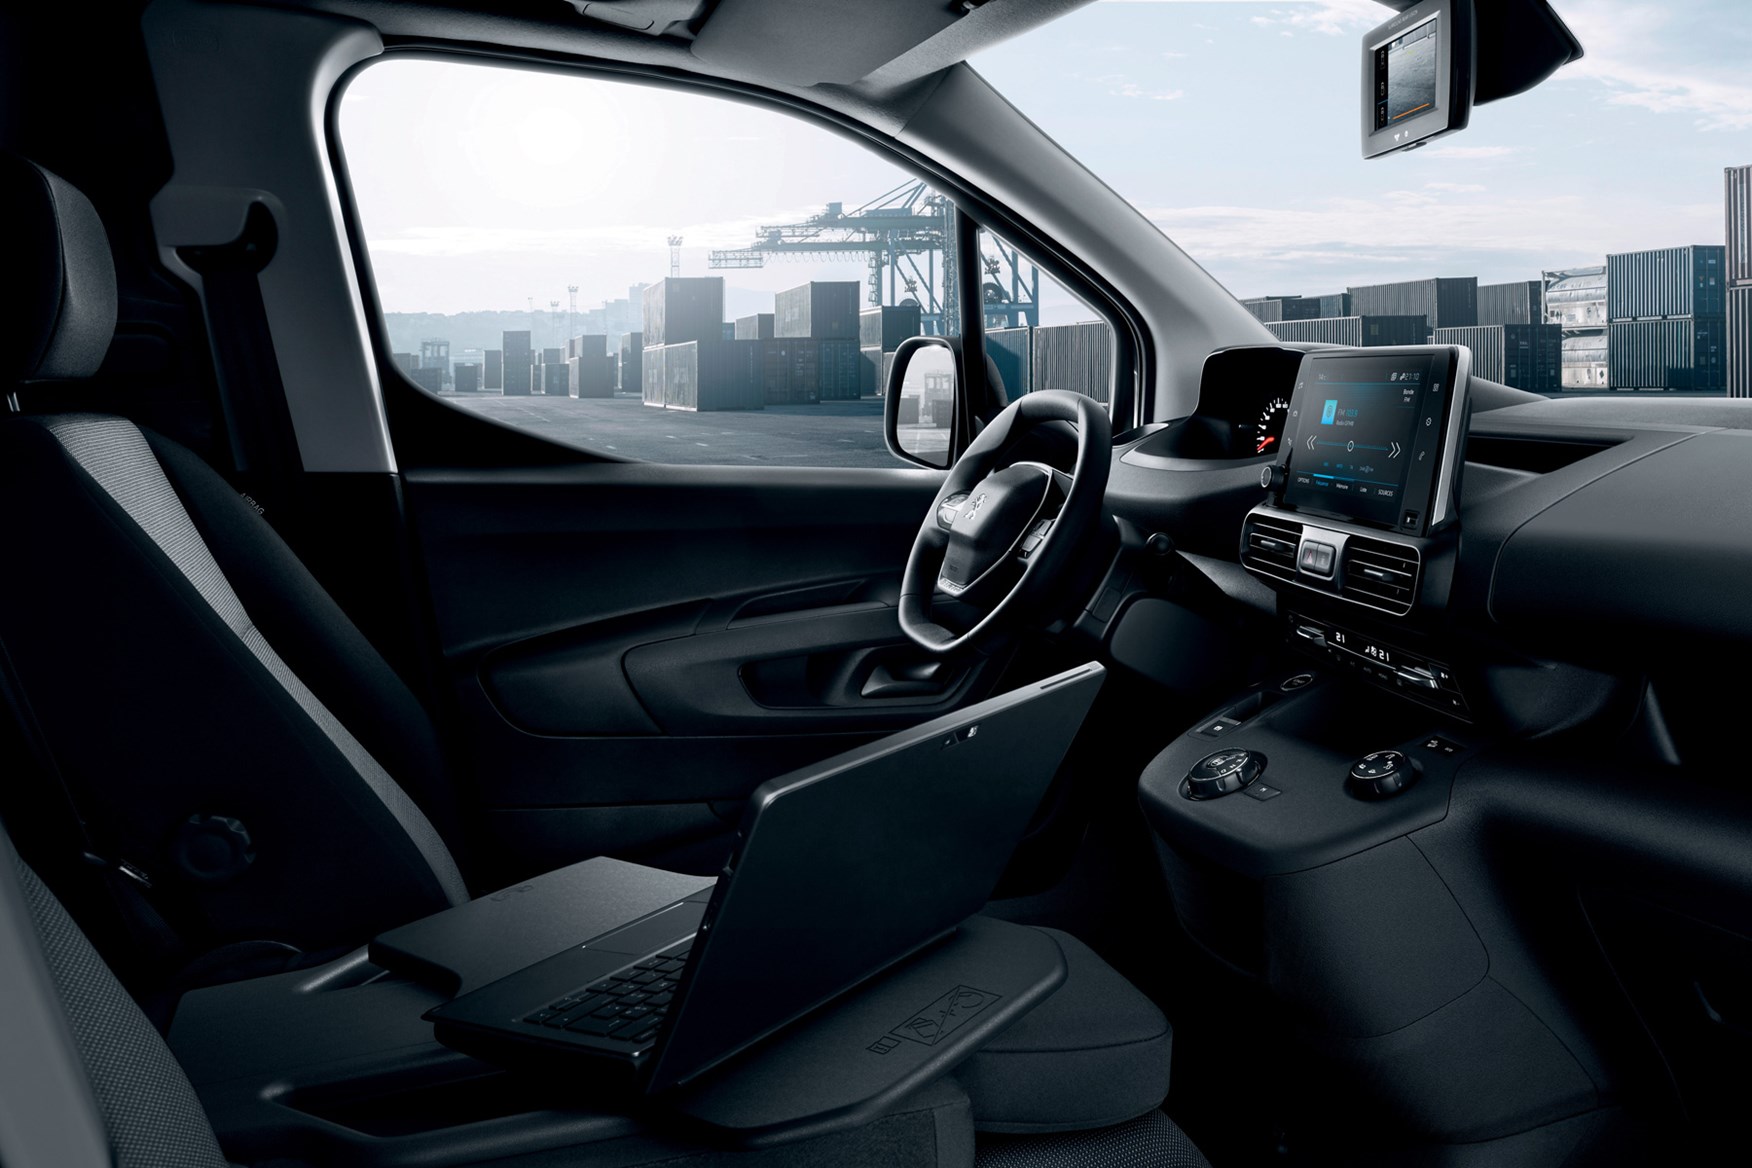 Peugeot Partner review 2020, i-Cockpit, view from passenger side